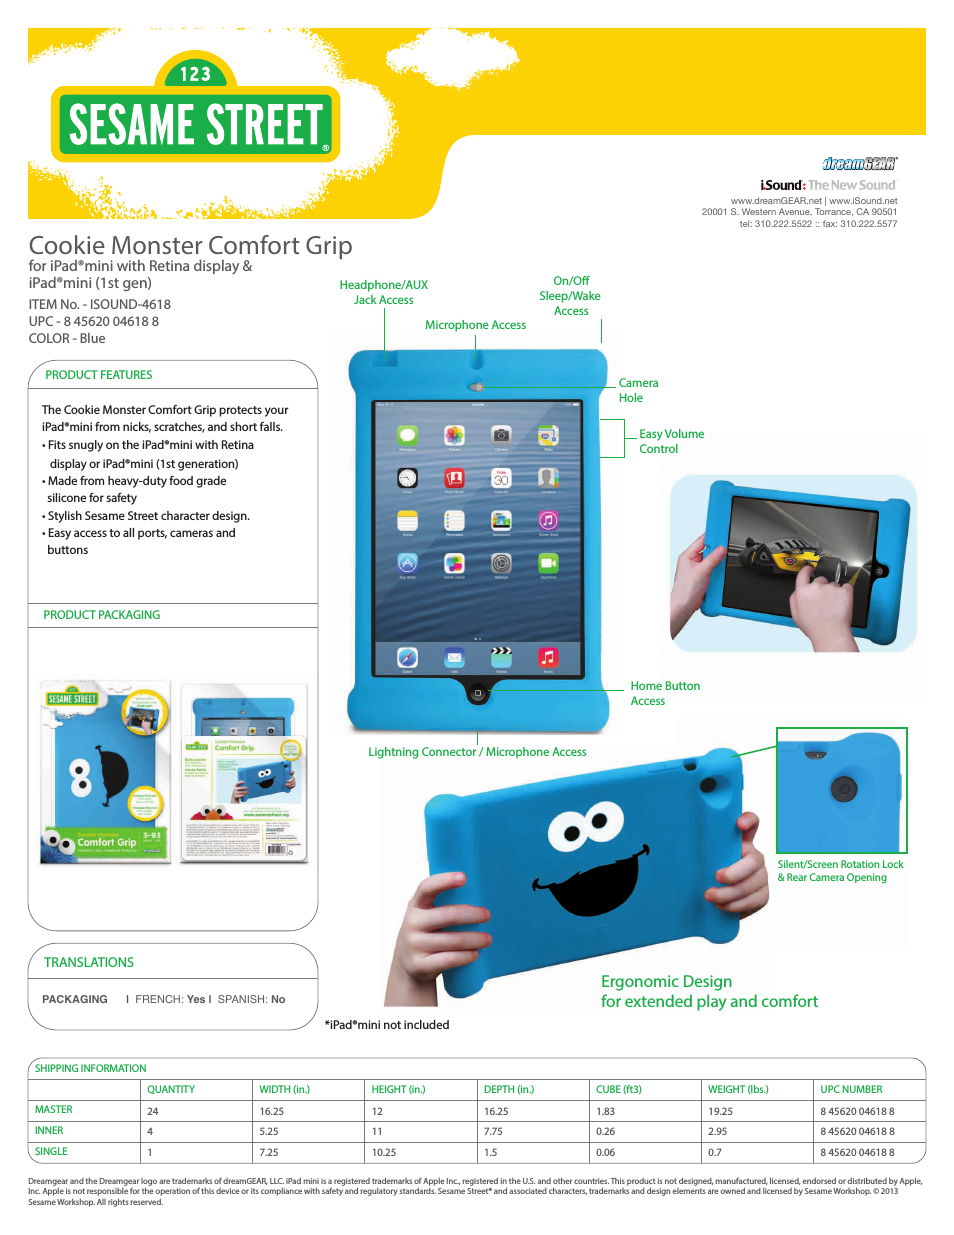 Cookie Monster Comfort Grip for iPadmini - Sell Sheet